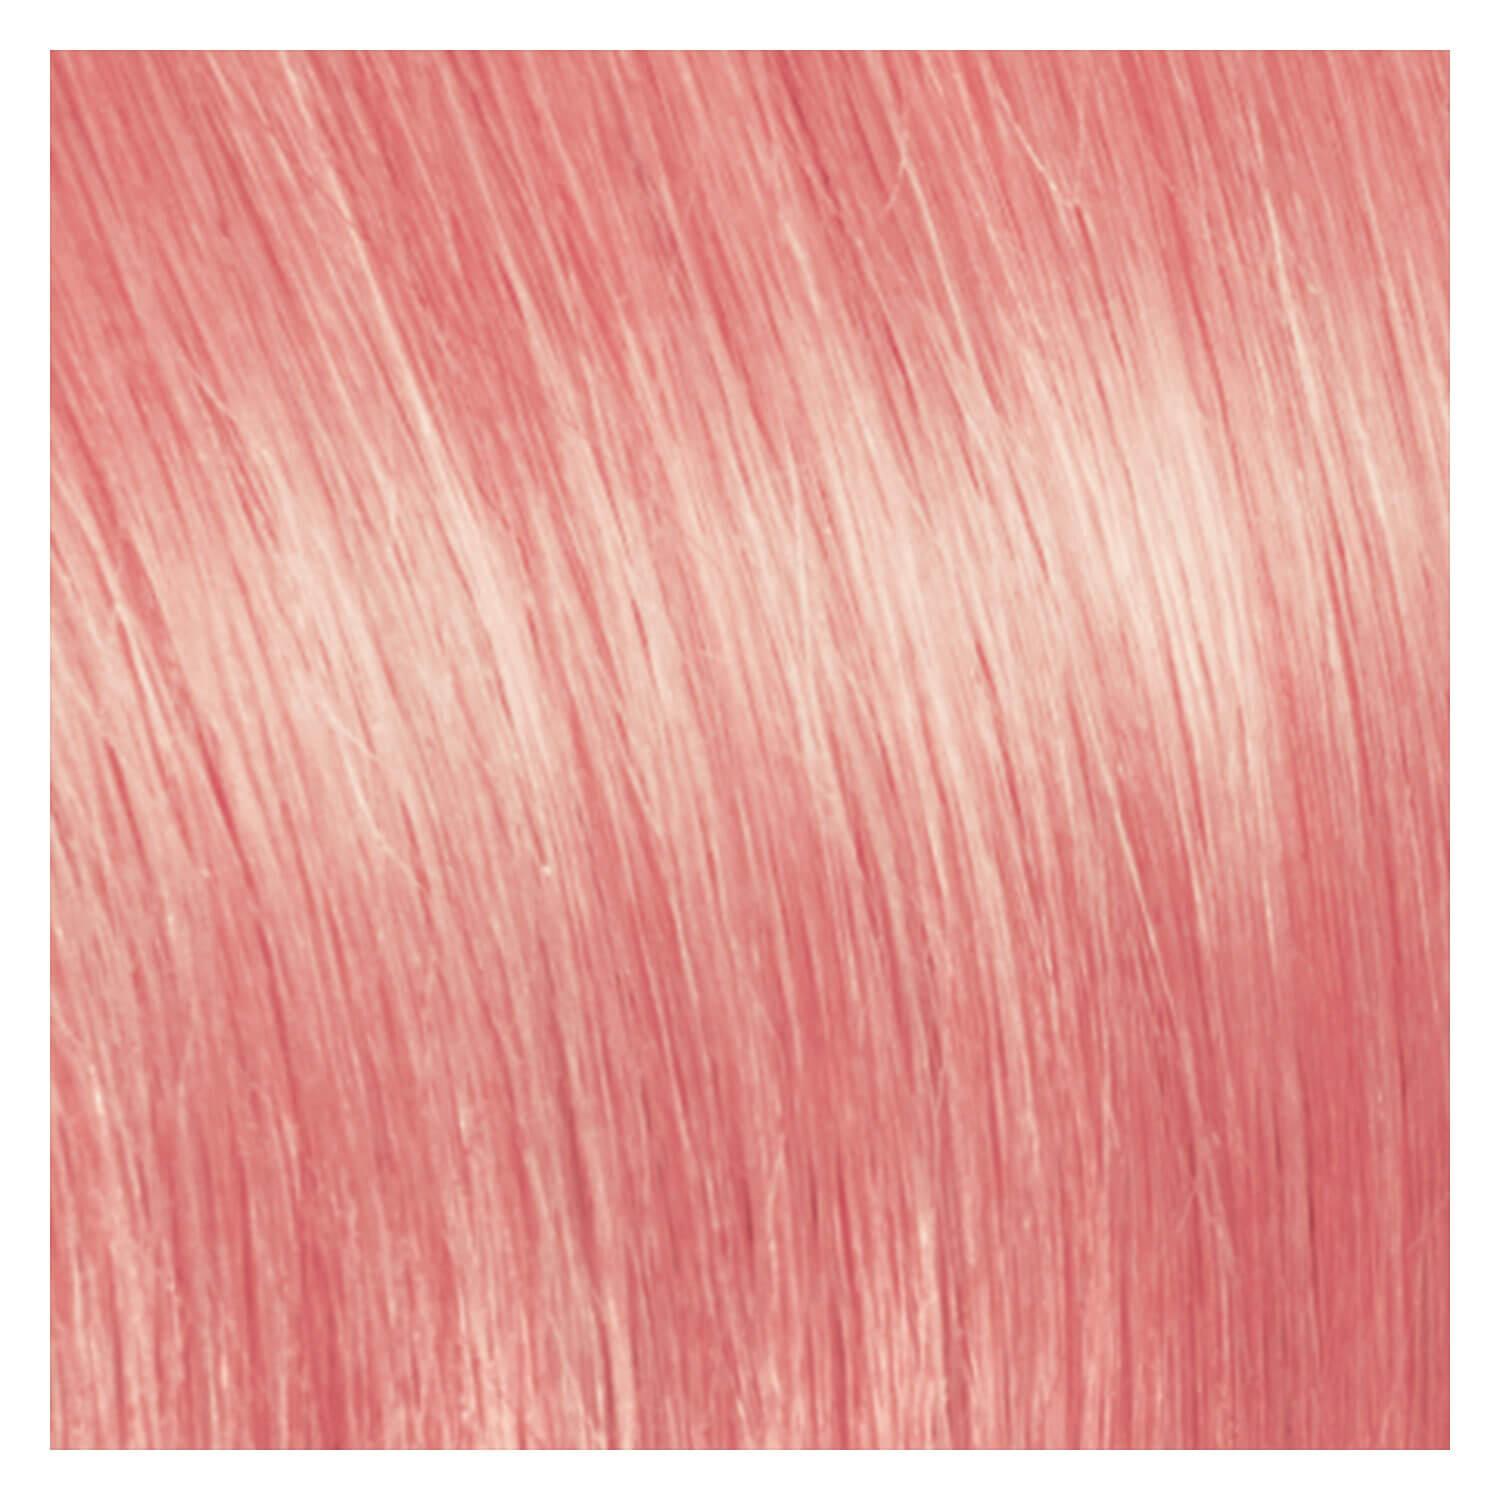 SHE Bonding-System Hair Extensions Fantasy Straight - Pink 55/60cm